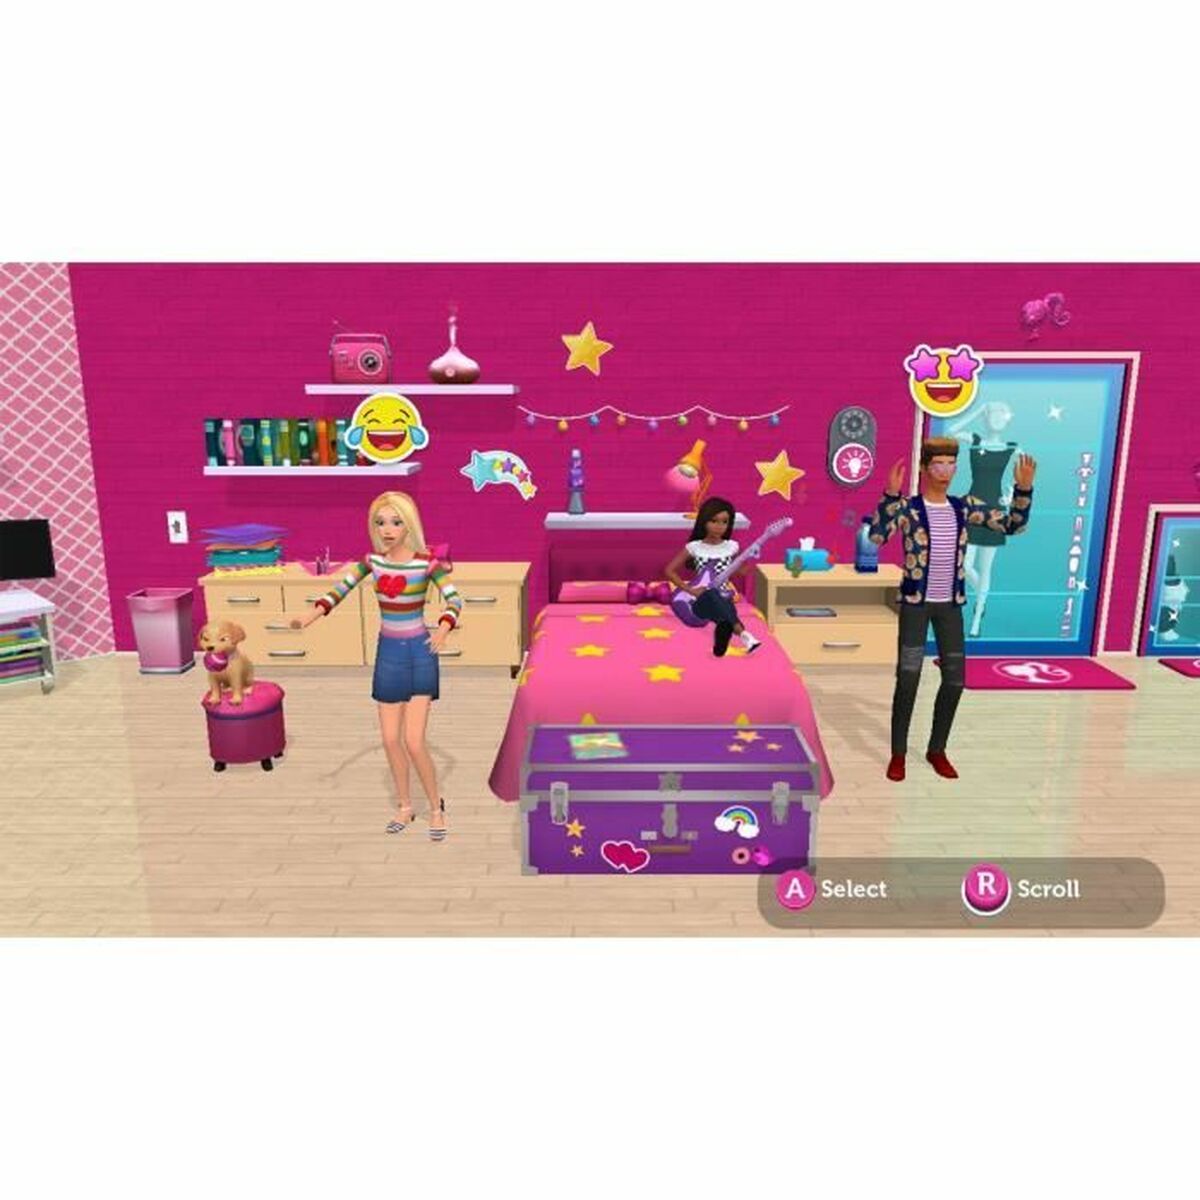 Videospēle Switch Barbie Dreamhouse Adventures